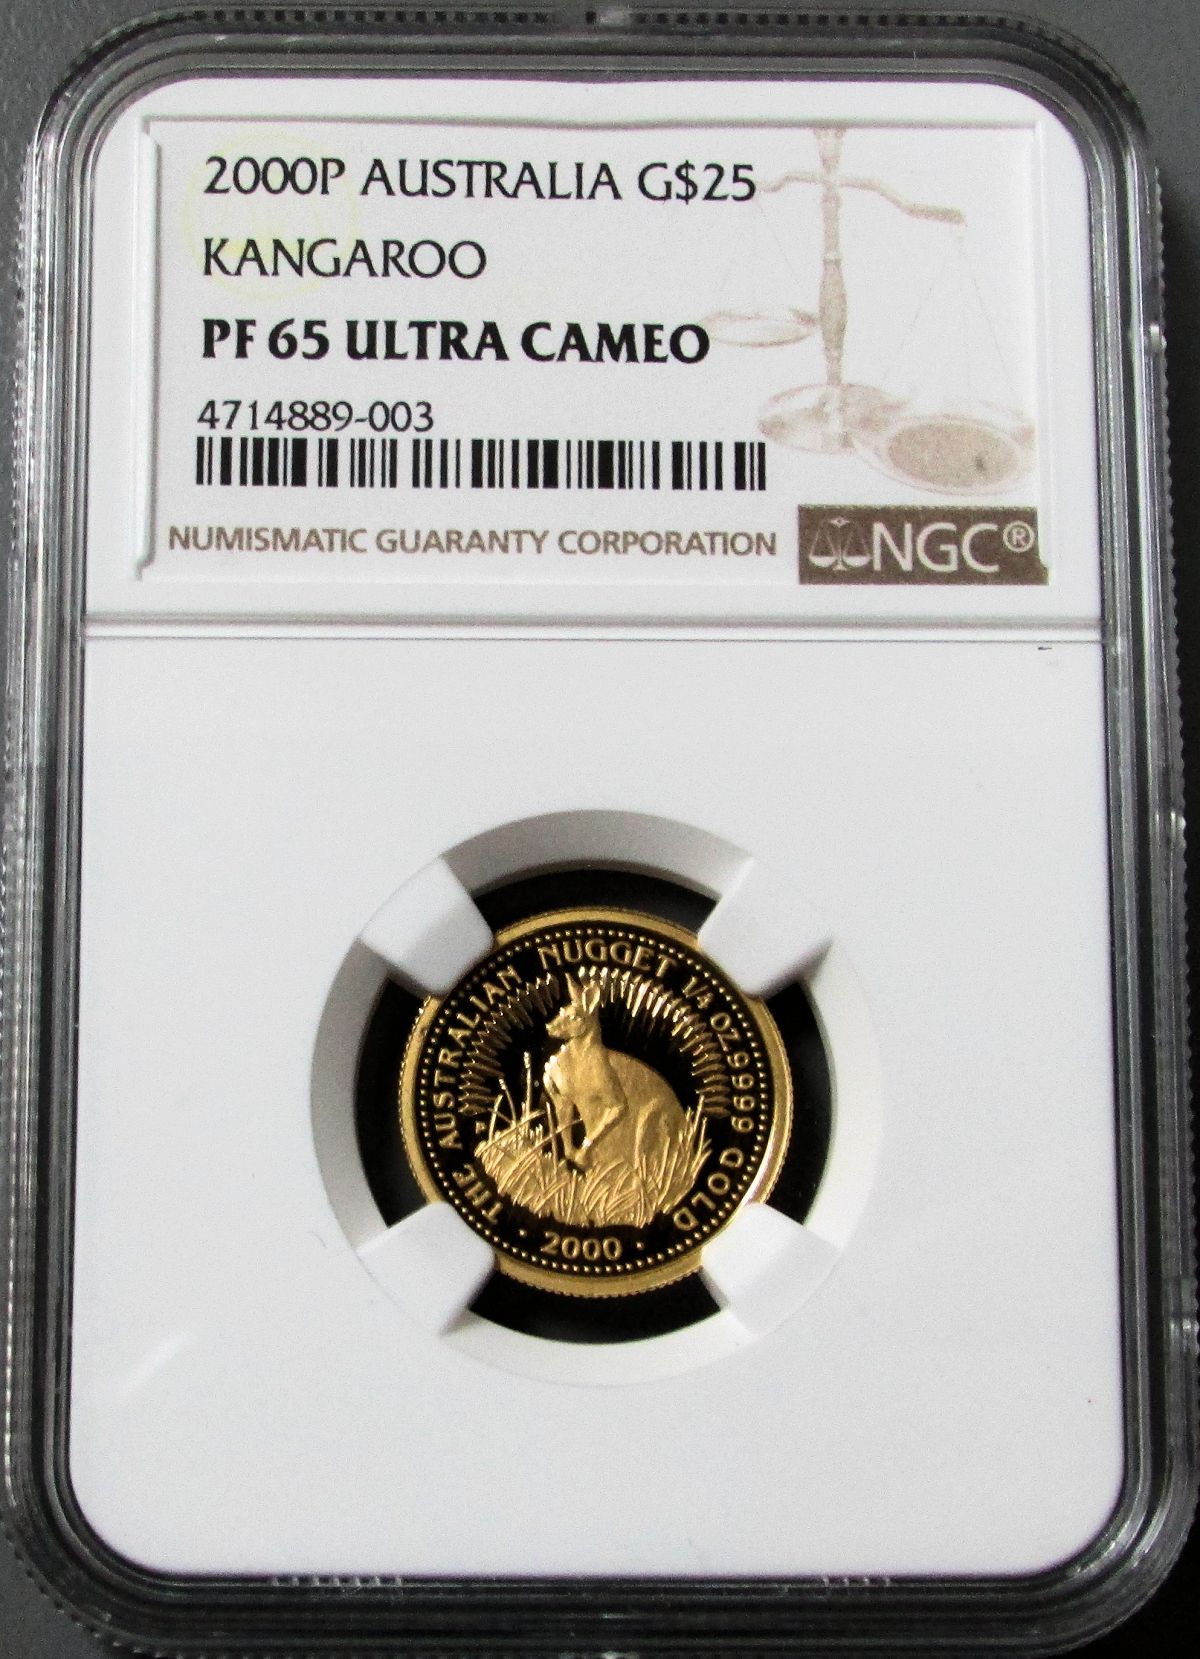 2000 P GOLD AUSTRALIA $25 PROOF 1/4oz KANGAROO COIN NGC PF 65 UC 309 MINTED 